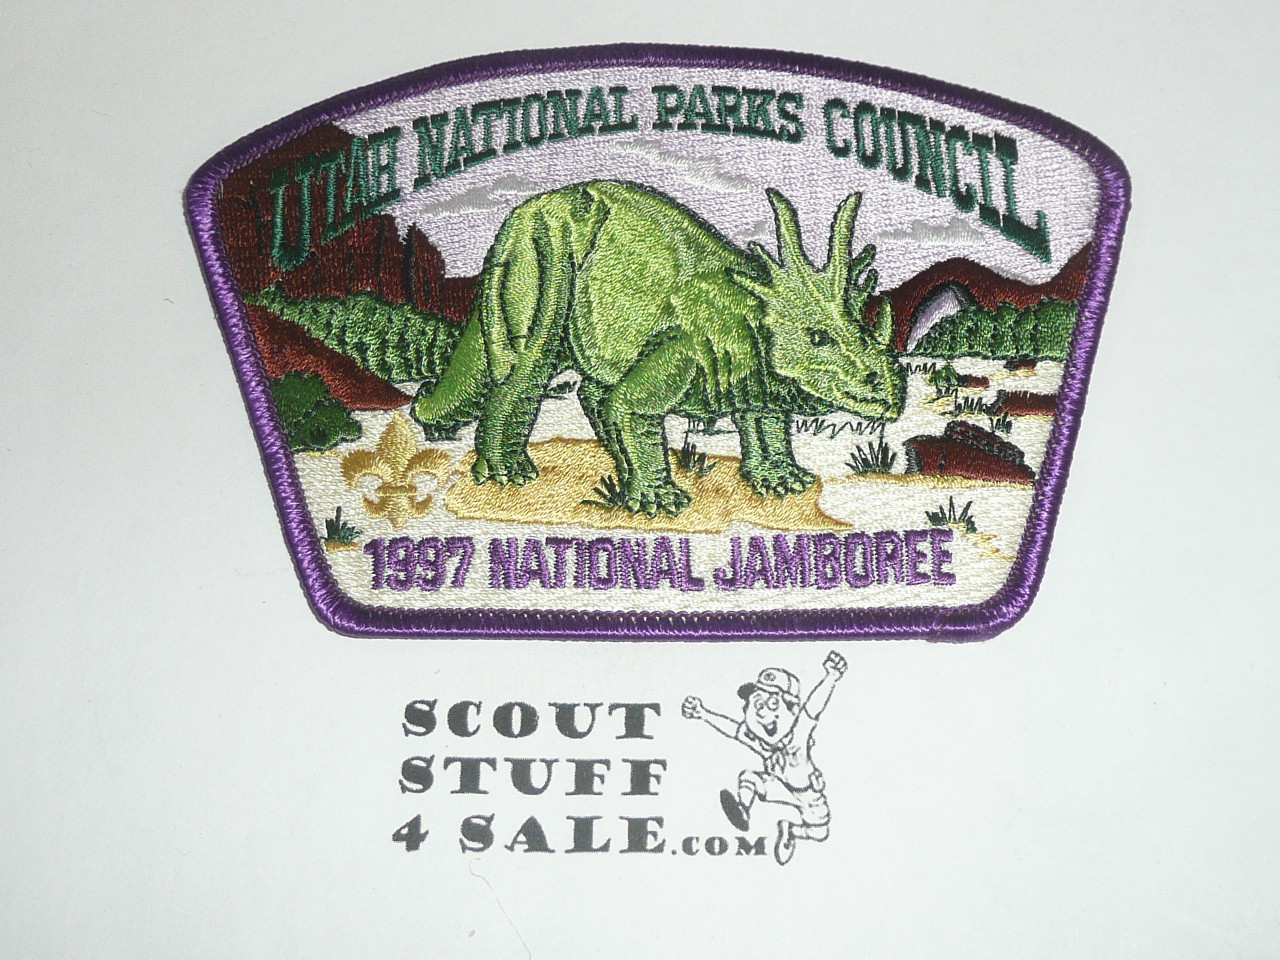 1997 National Jamboree JSP -Utah National Parks Council, purple bdr